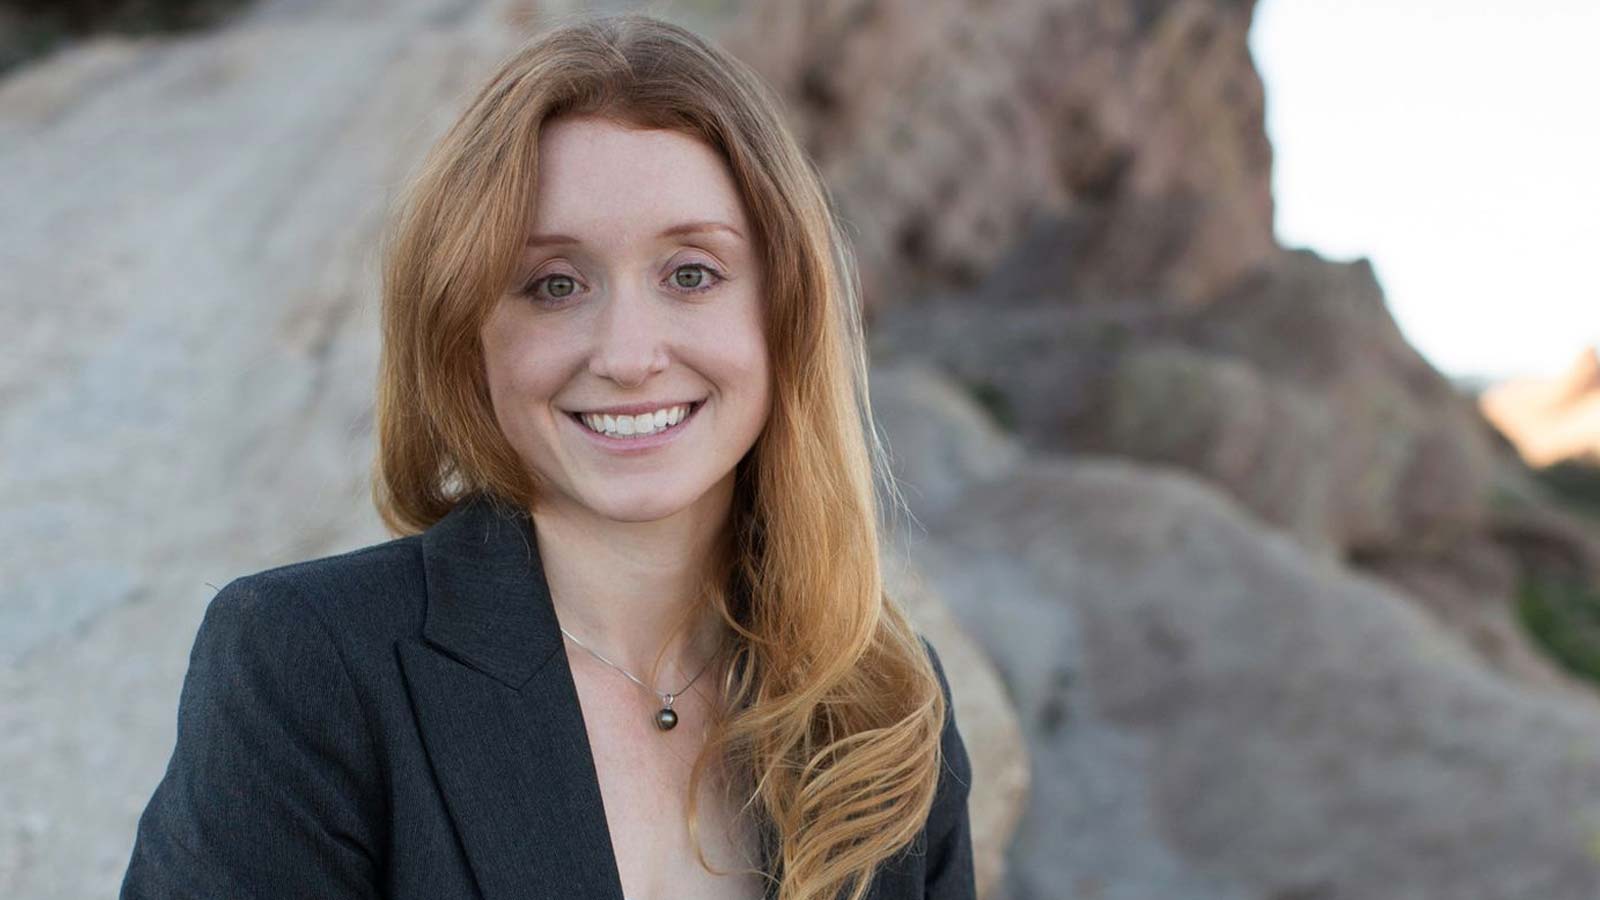 Jess Phoenix, Volcanologist, California 25th District